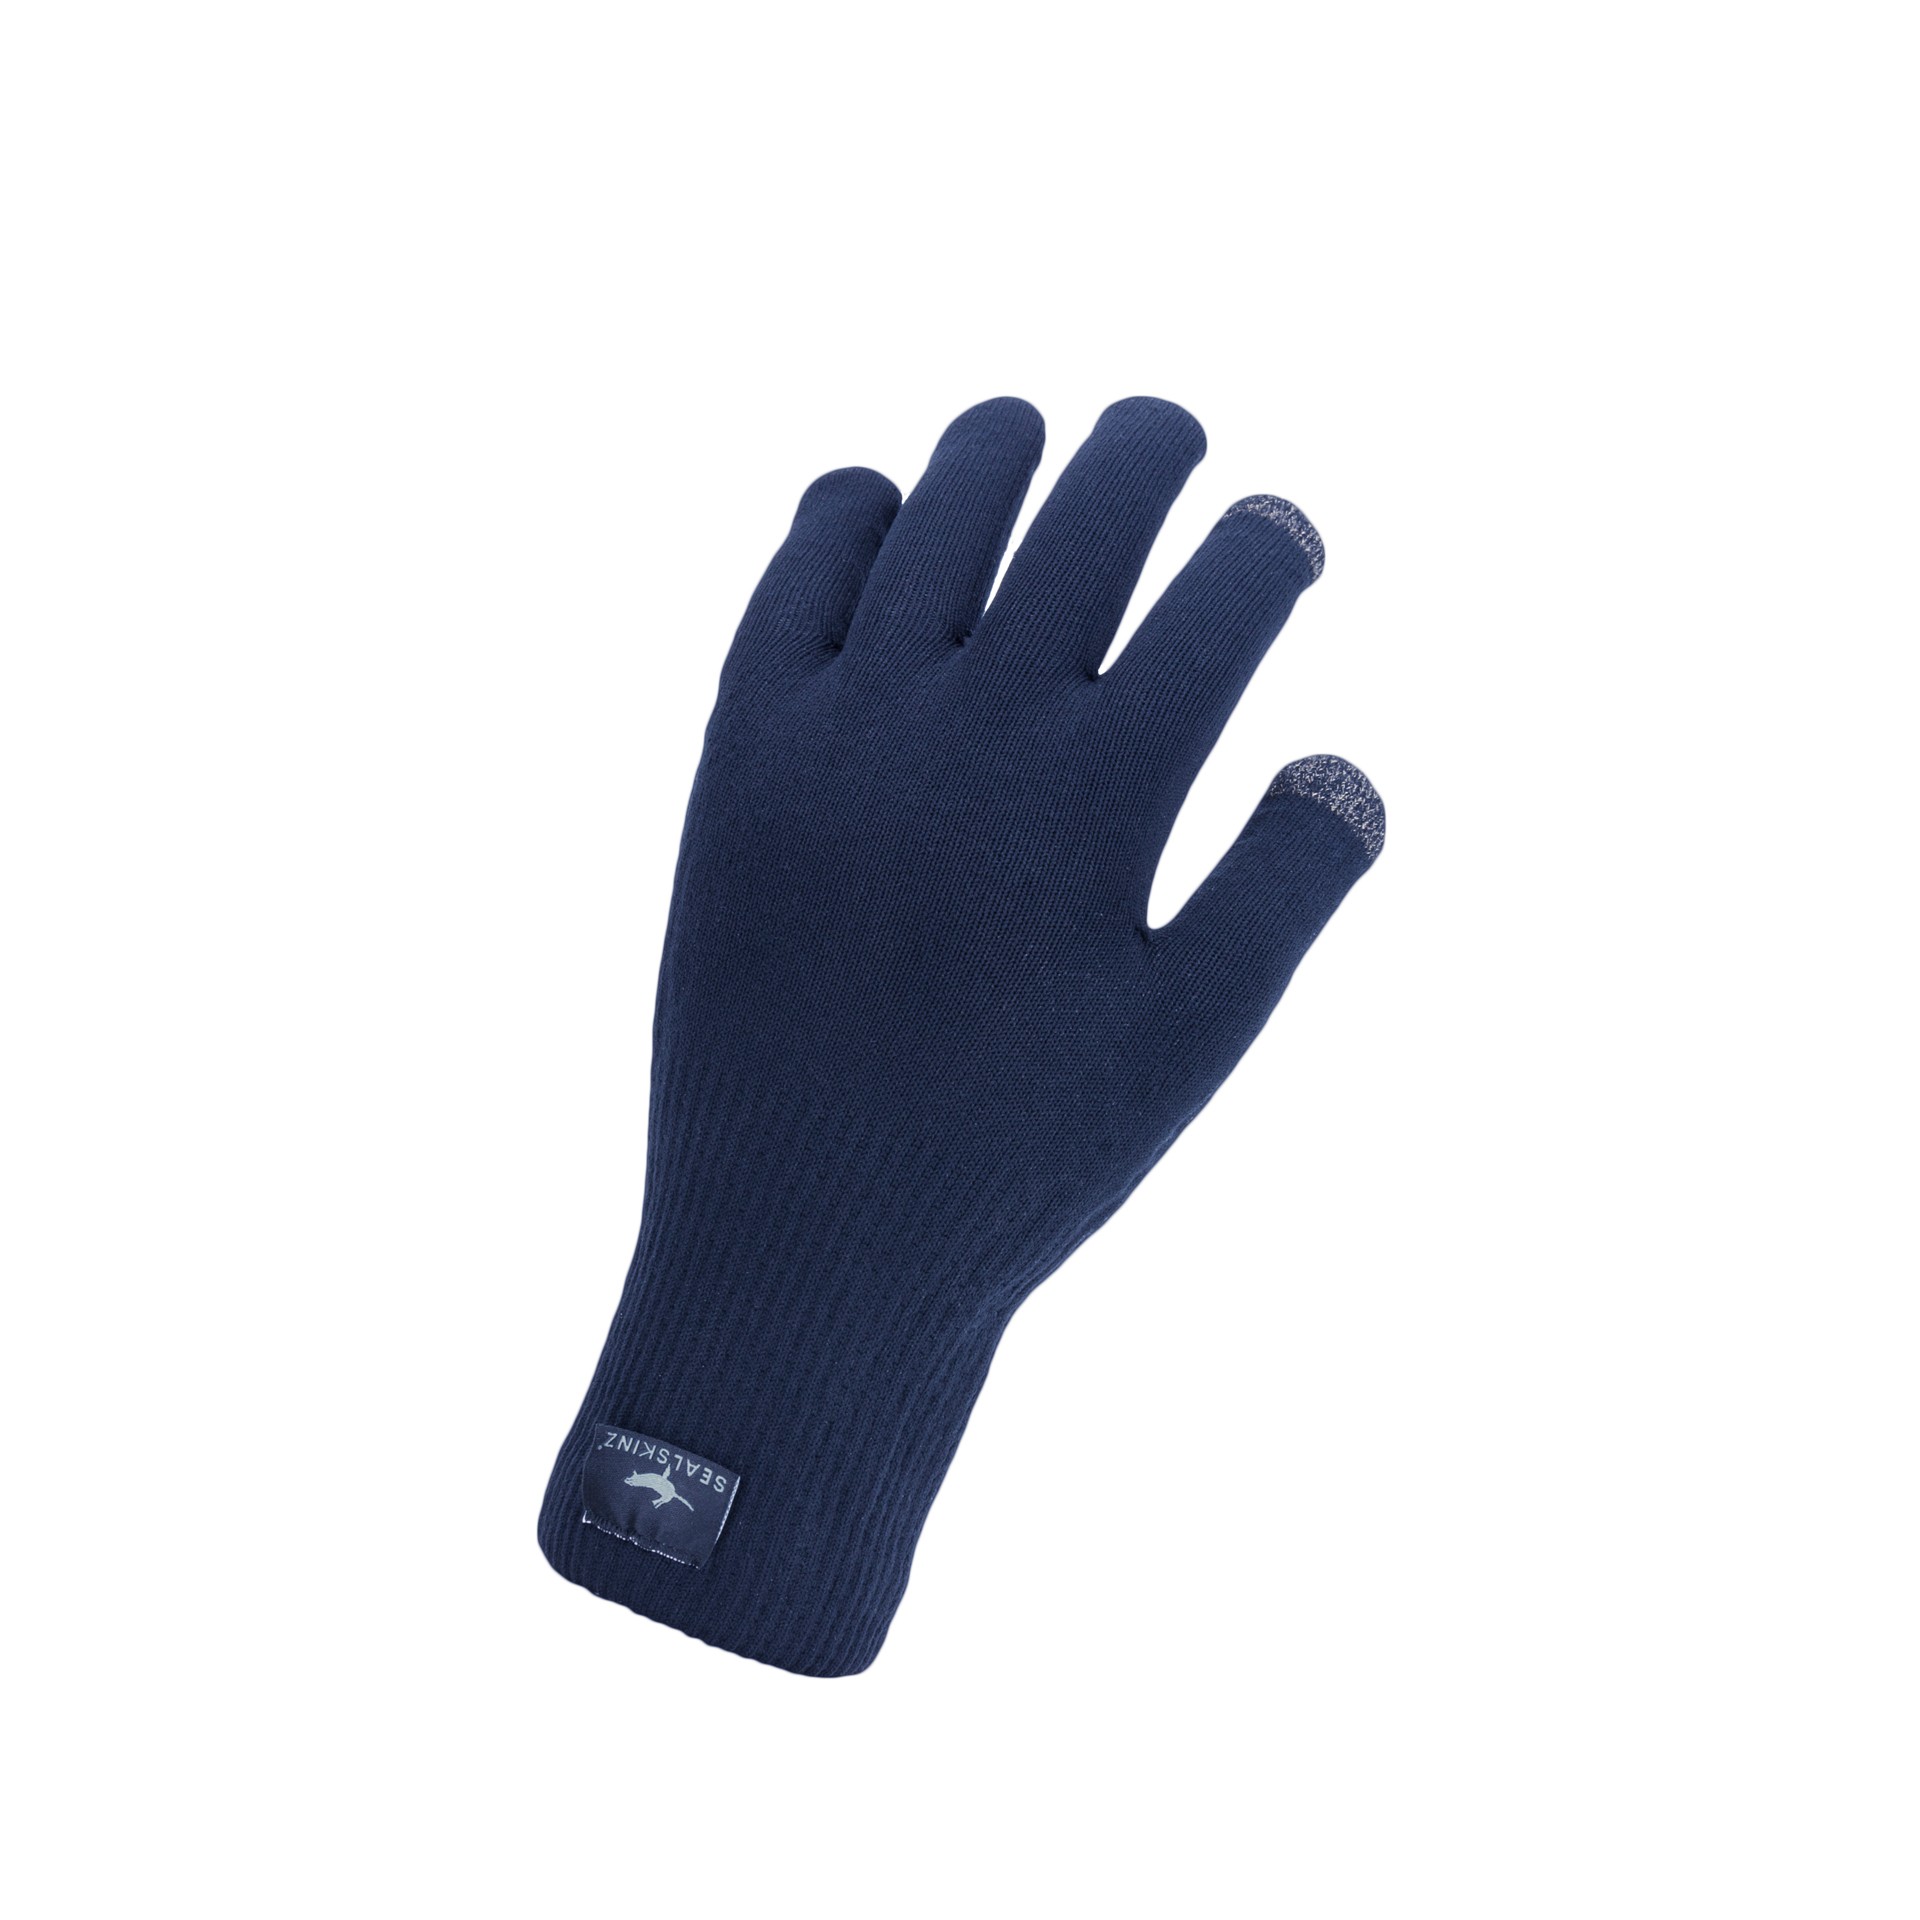 Sealskinz waterproof all weather ultra grip knitted gants de cyclisme noir